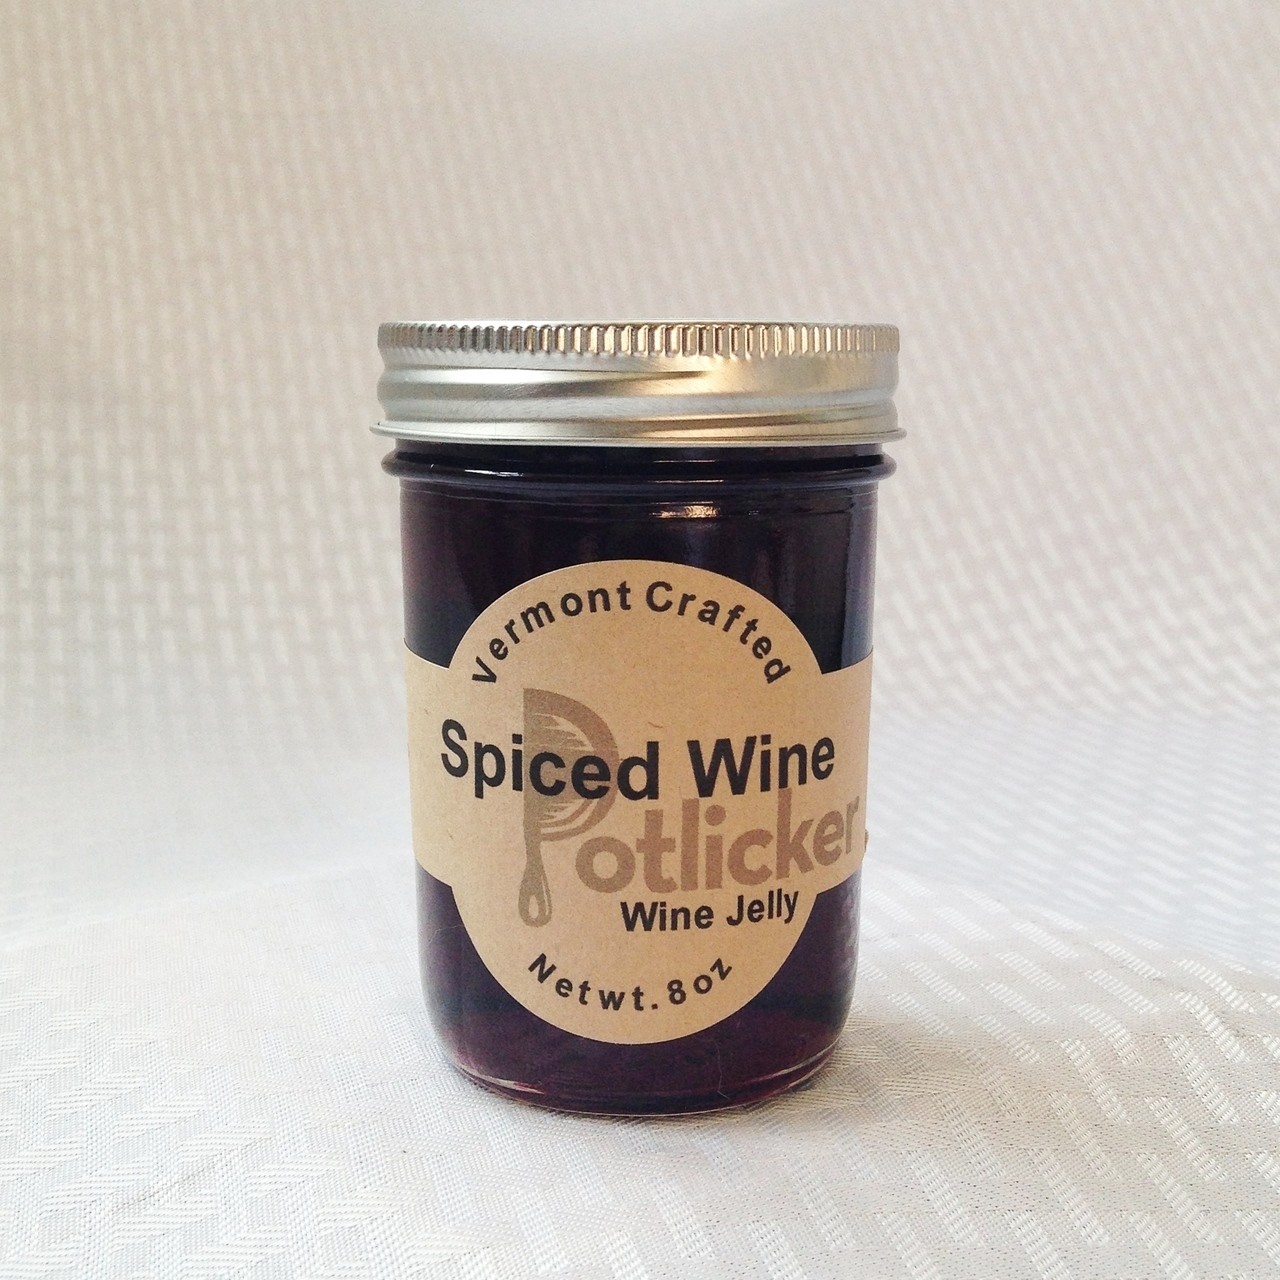 Potlicker Kitchen Spiced Wine Jelly